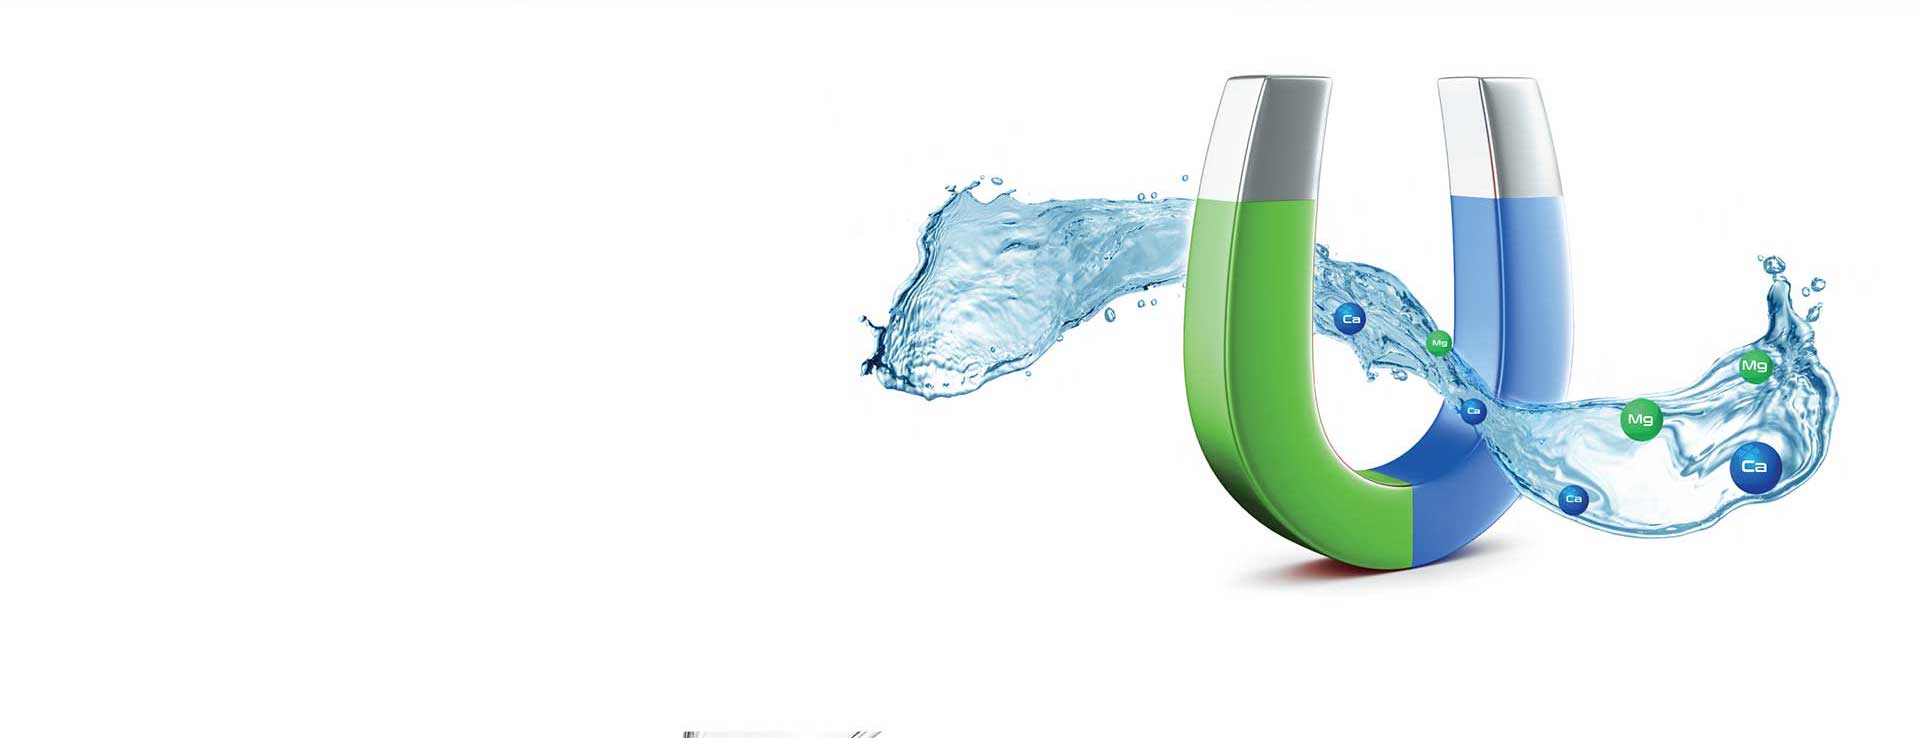 eureka forbes aquaguard crest uv+hot water purifier